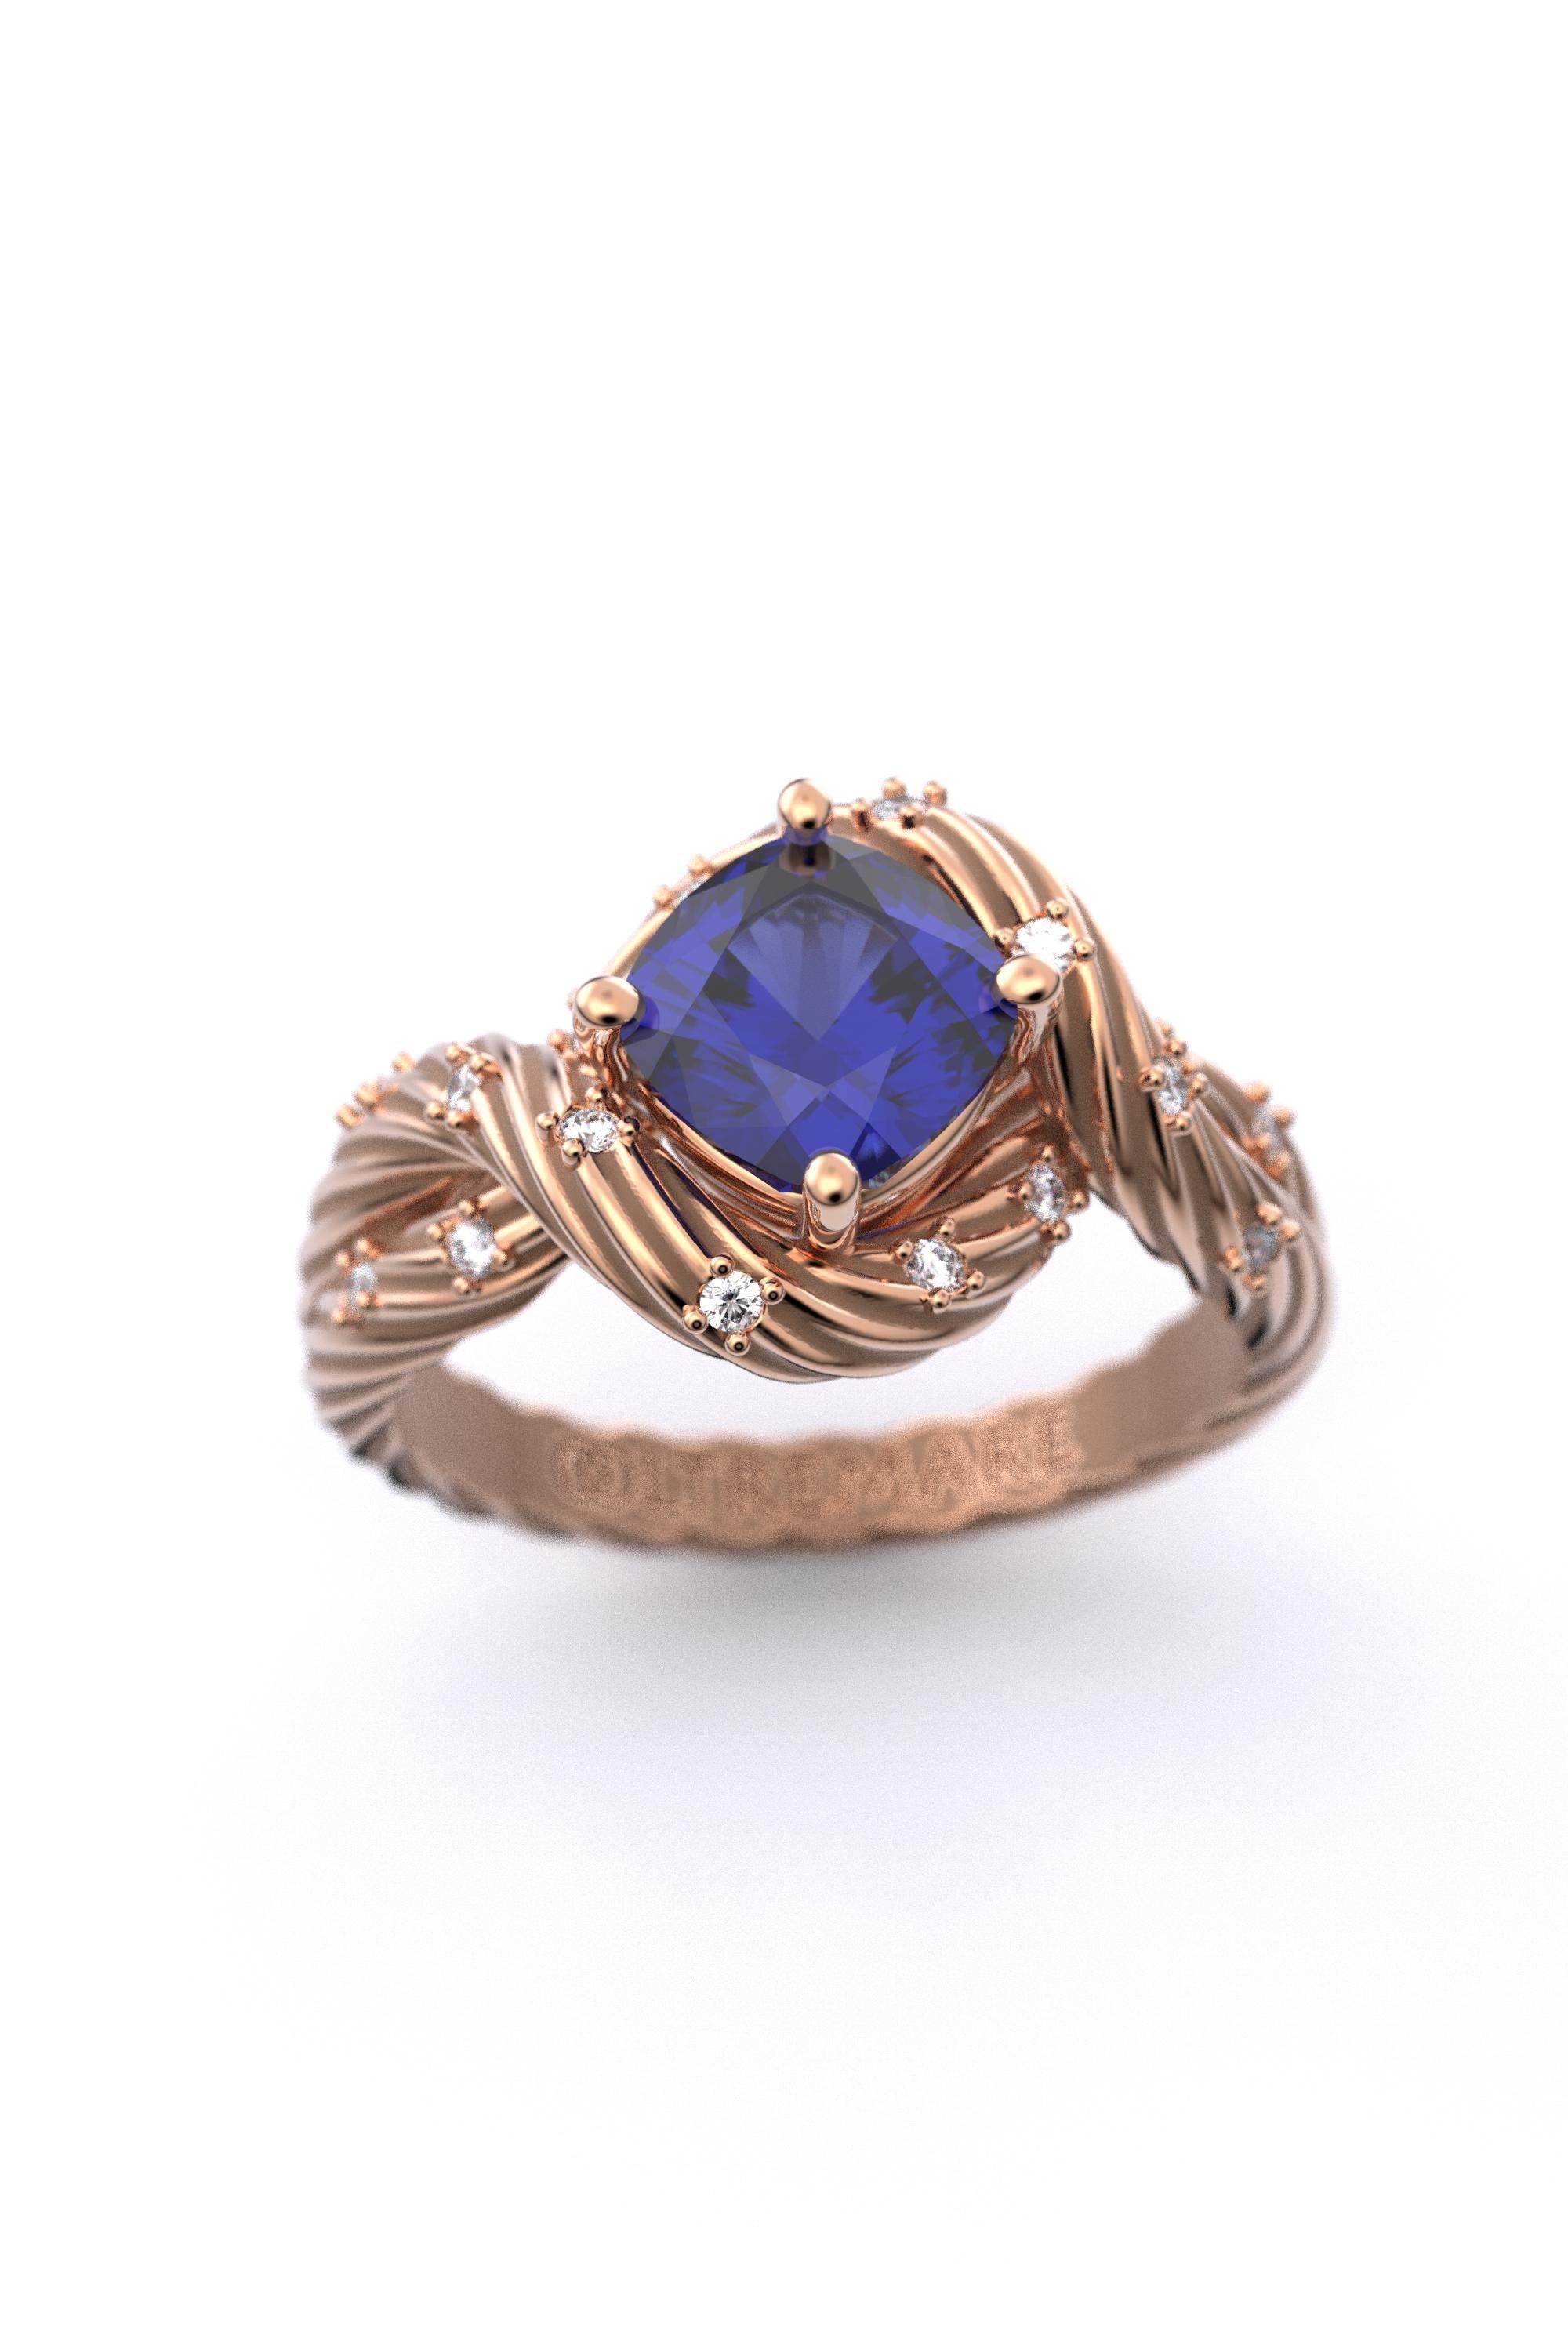 For Sale:  Tanzanite and Diamonds Statement Ring in 18k Solid Gold, Italian Fine Jewelry 3